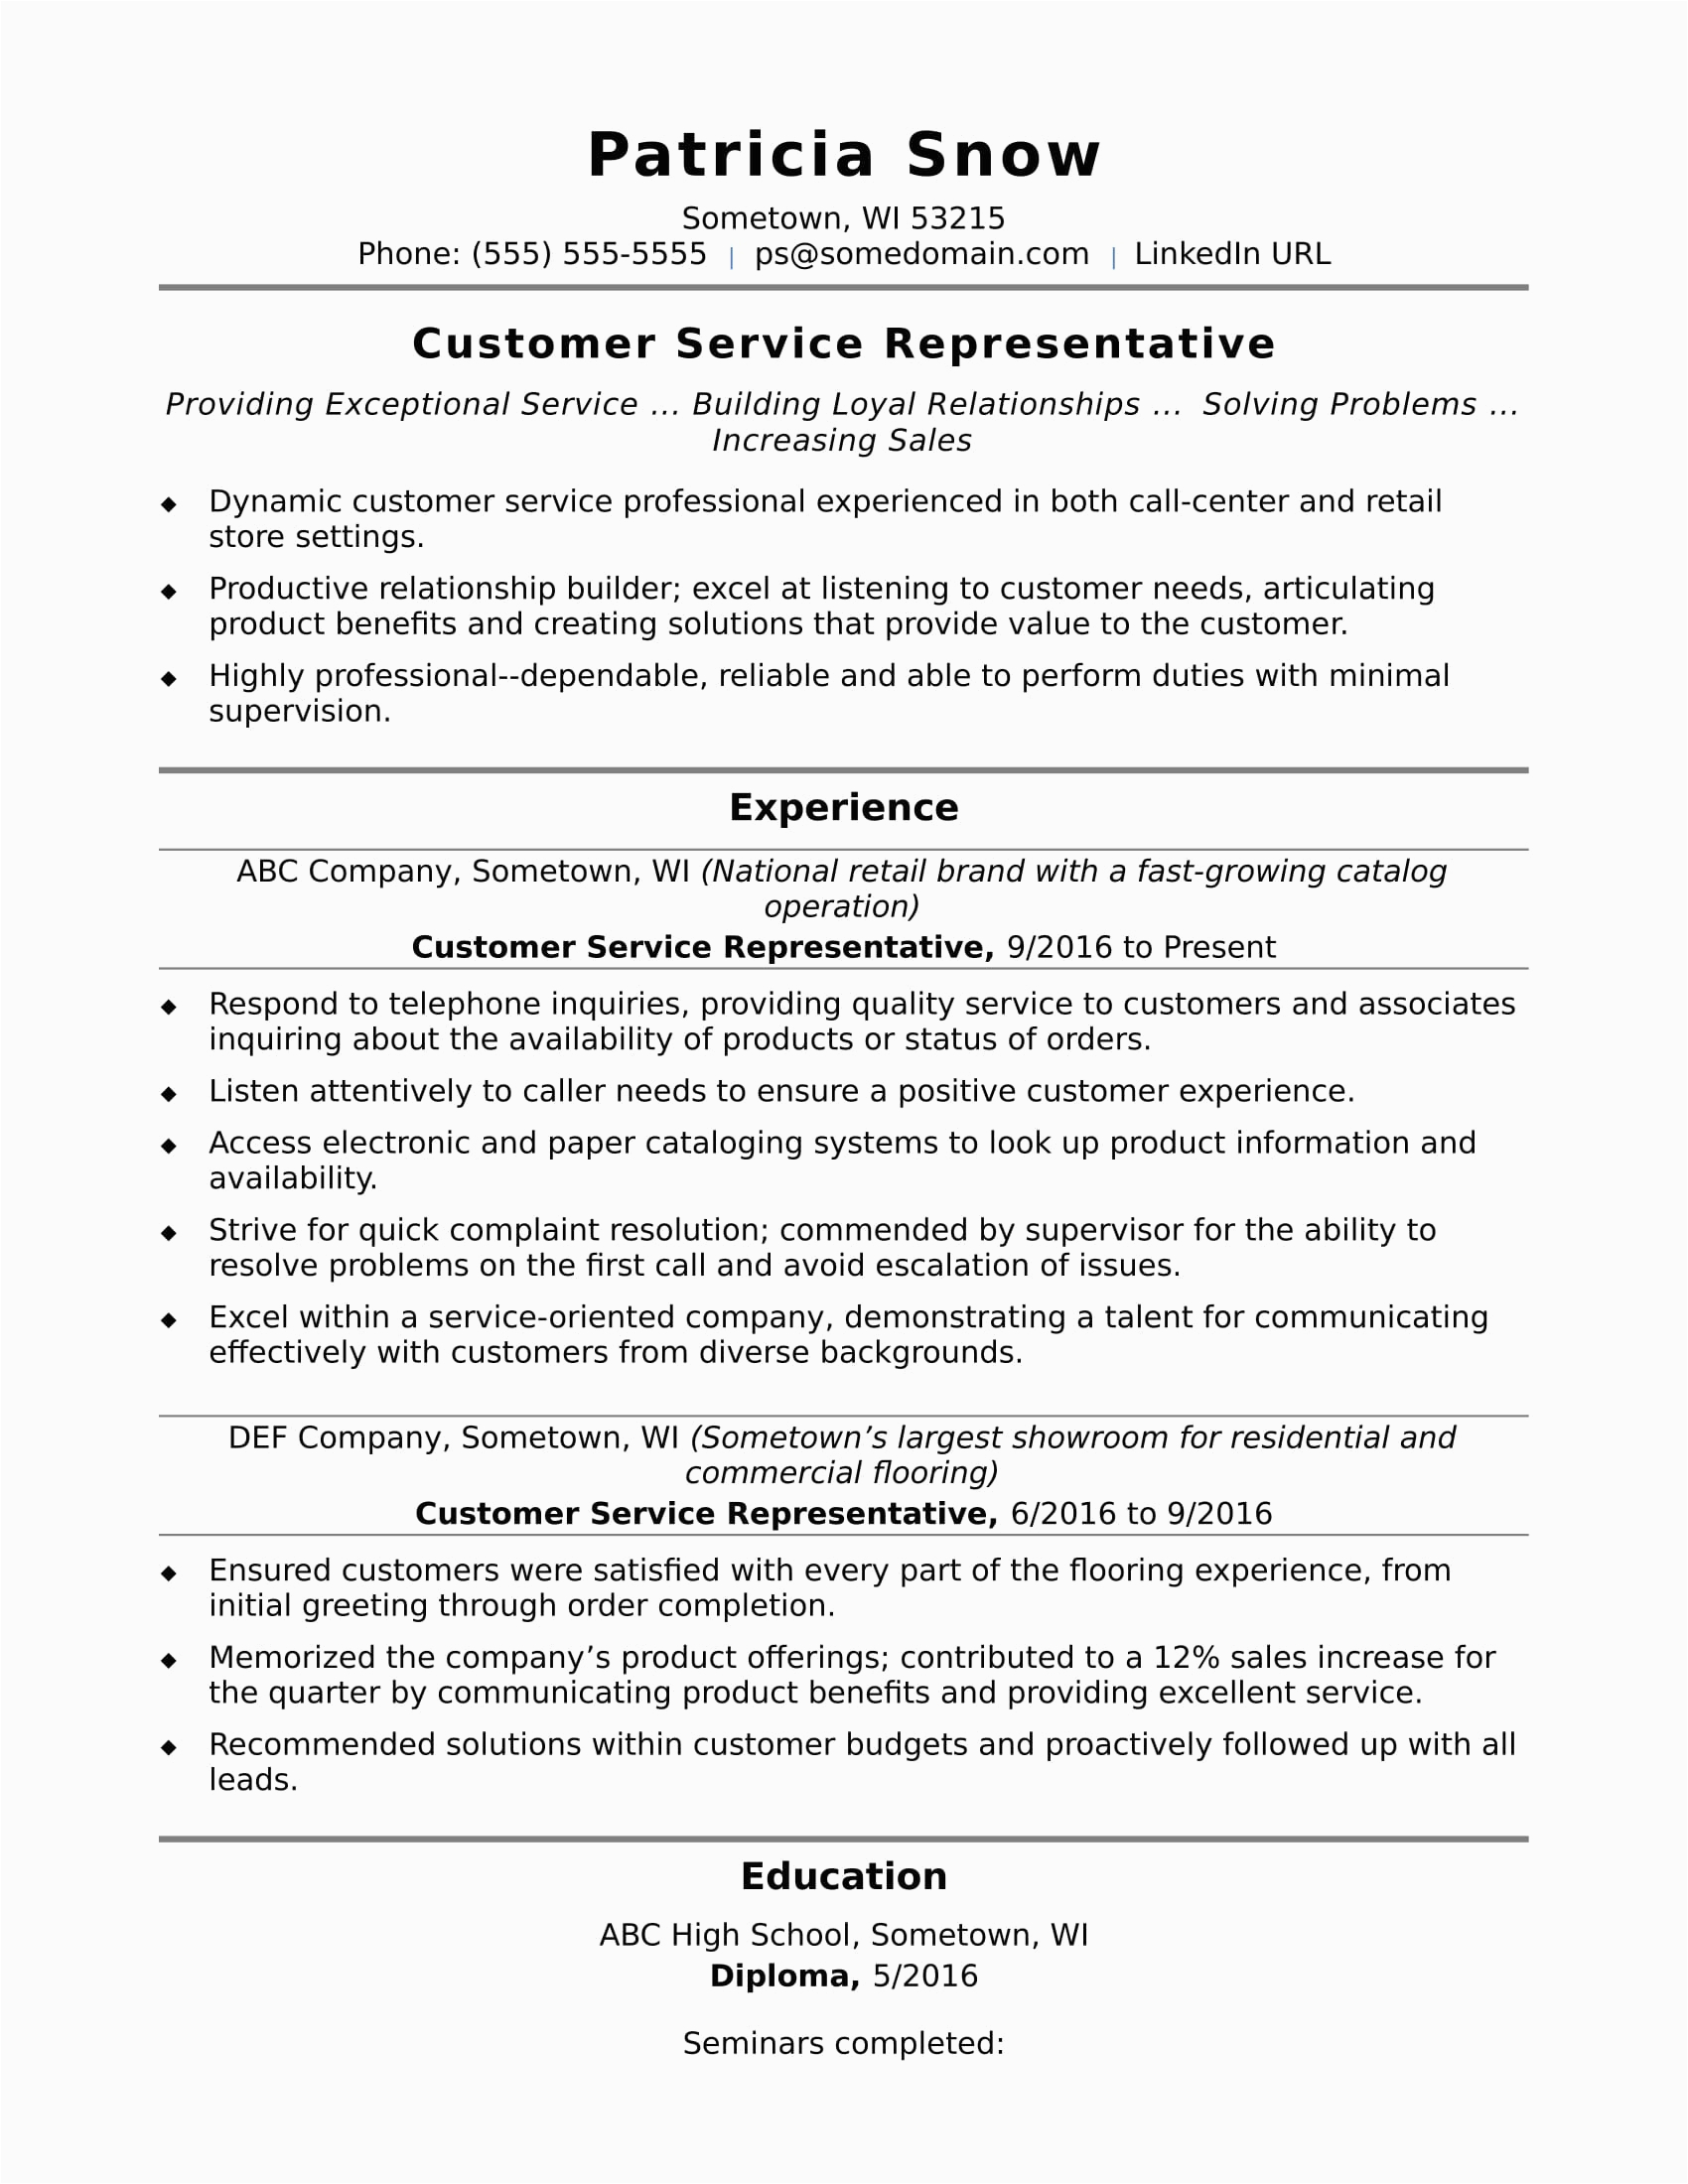 Customer Service Skills On Resume Sample Customer Service Representative Resume Sample